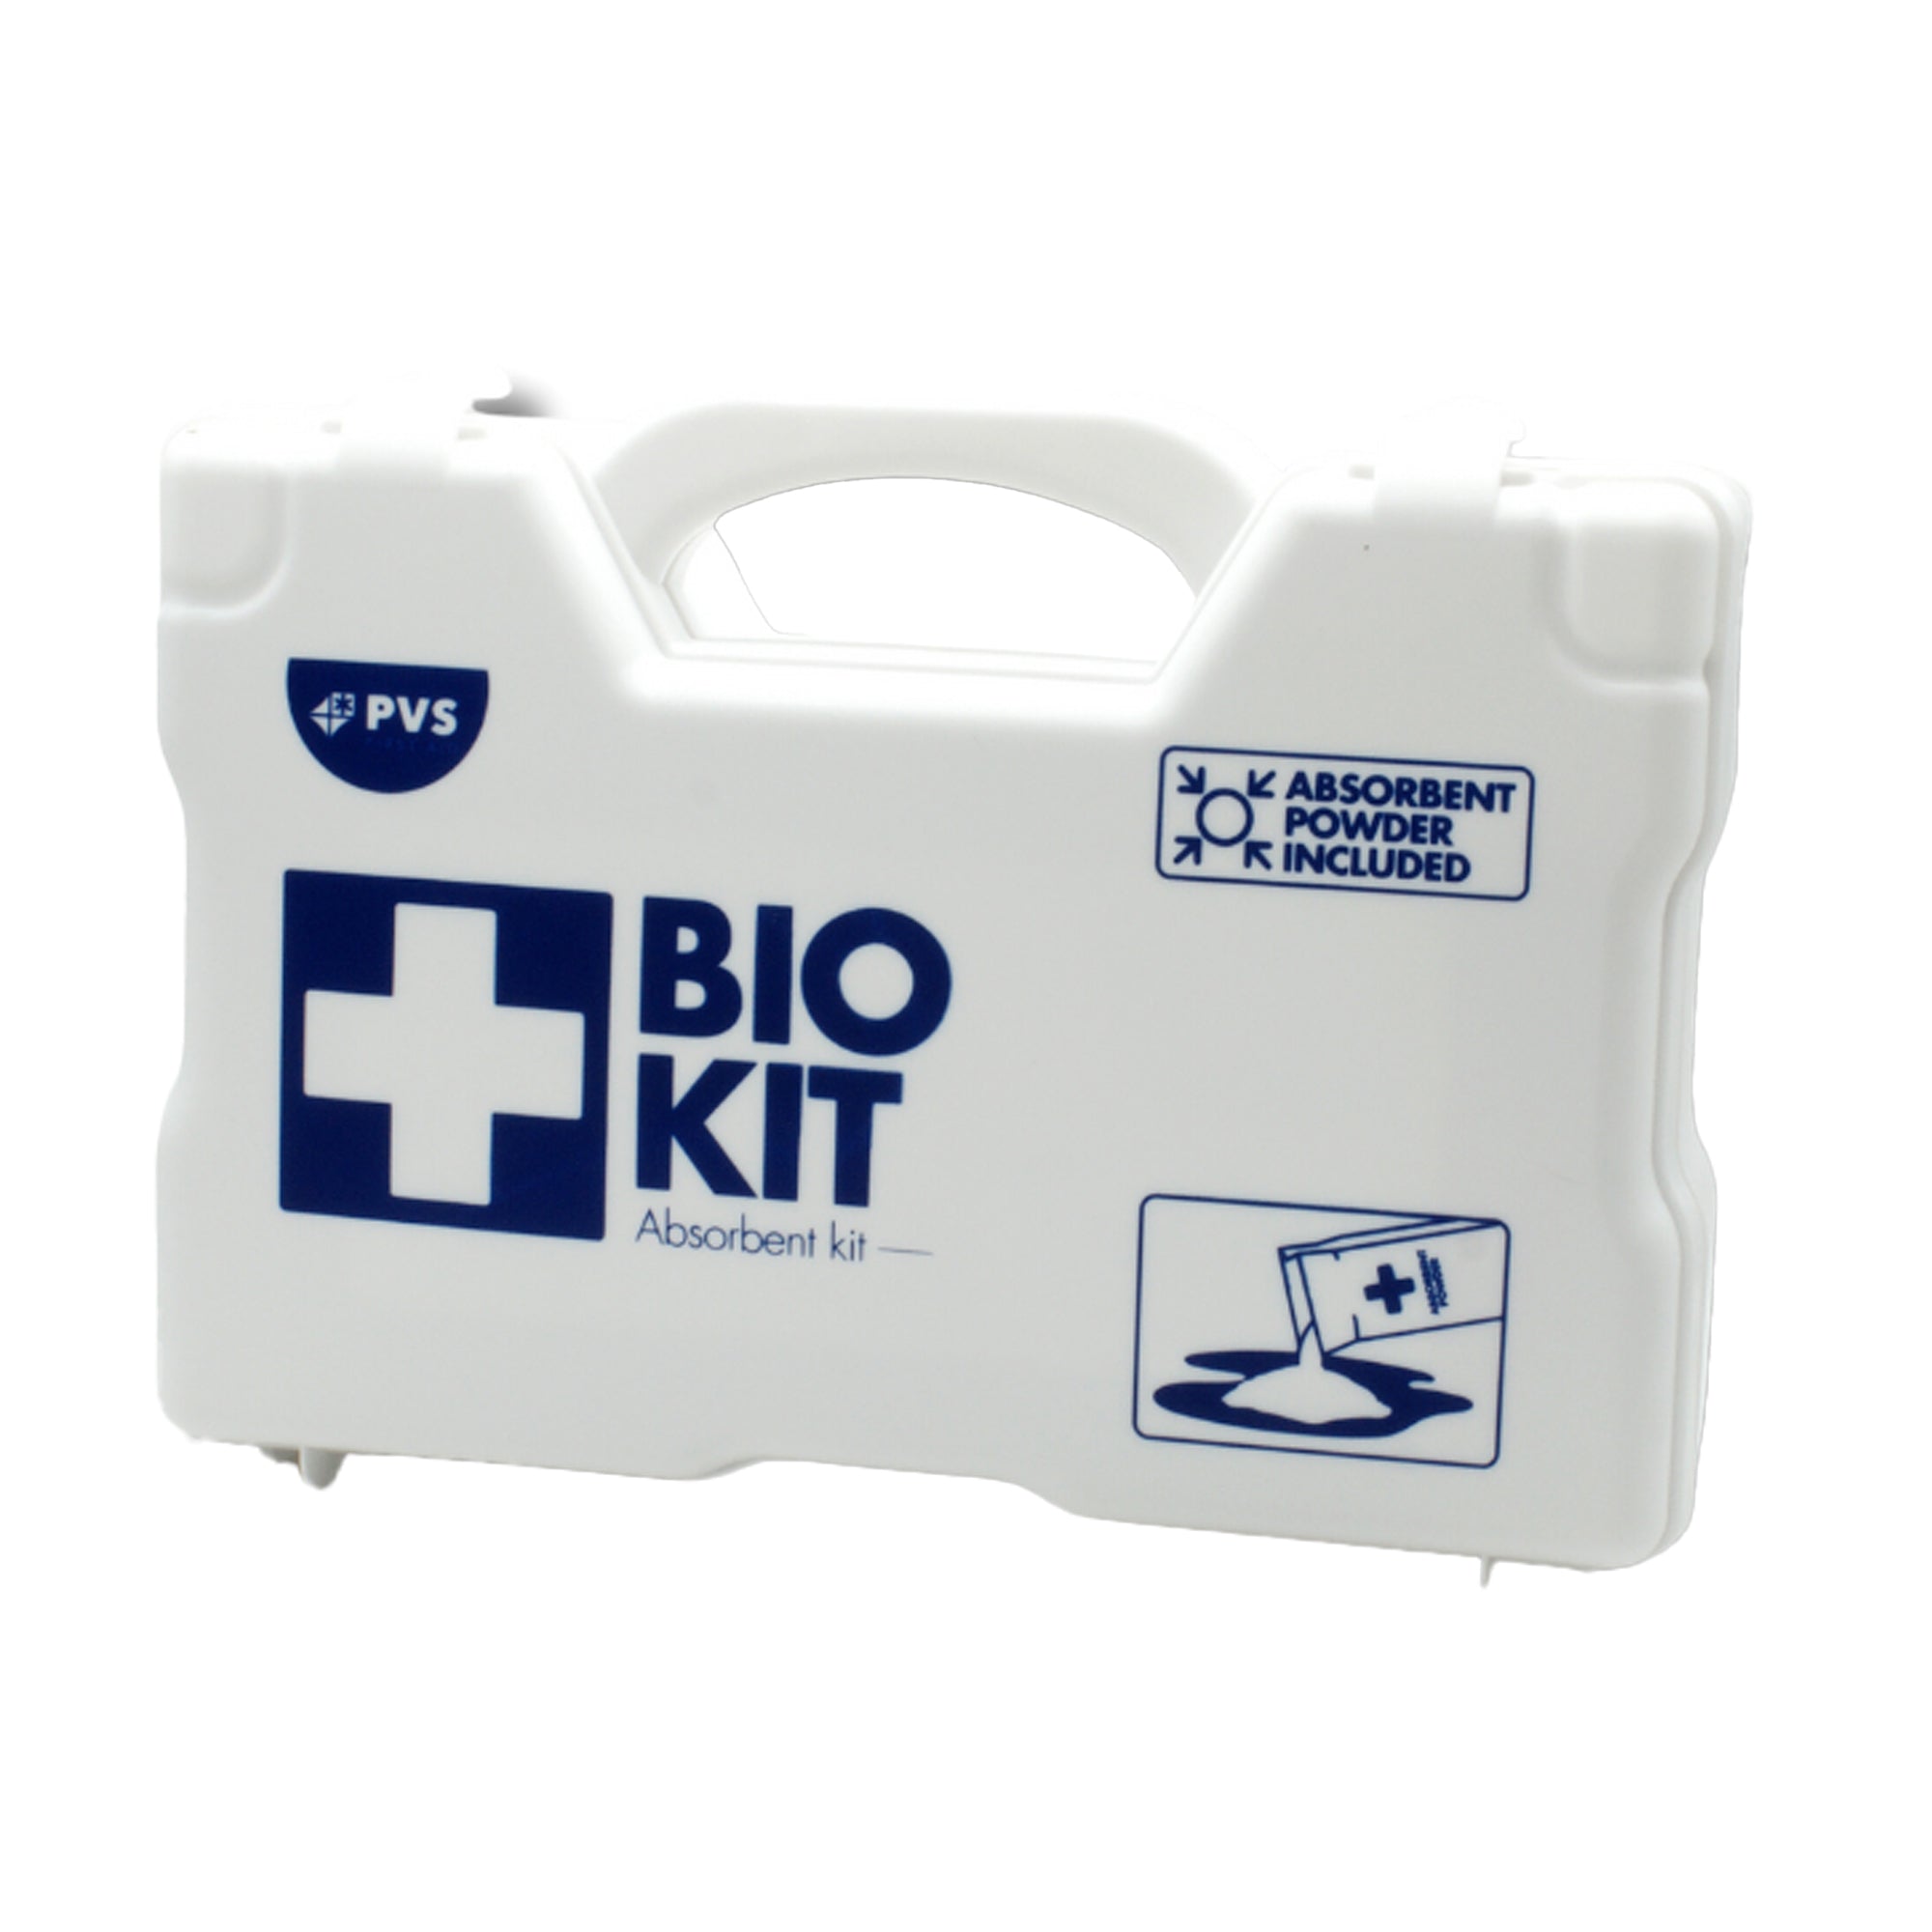 pvs-biokit-valigetta-polvere-addensante-assorbimento-liquidi-biologici